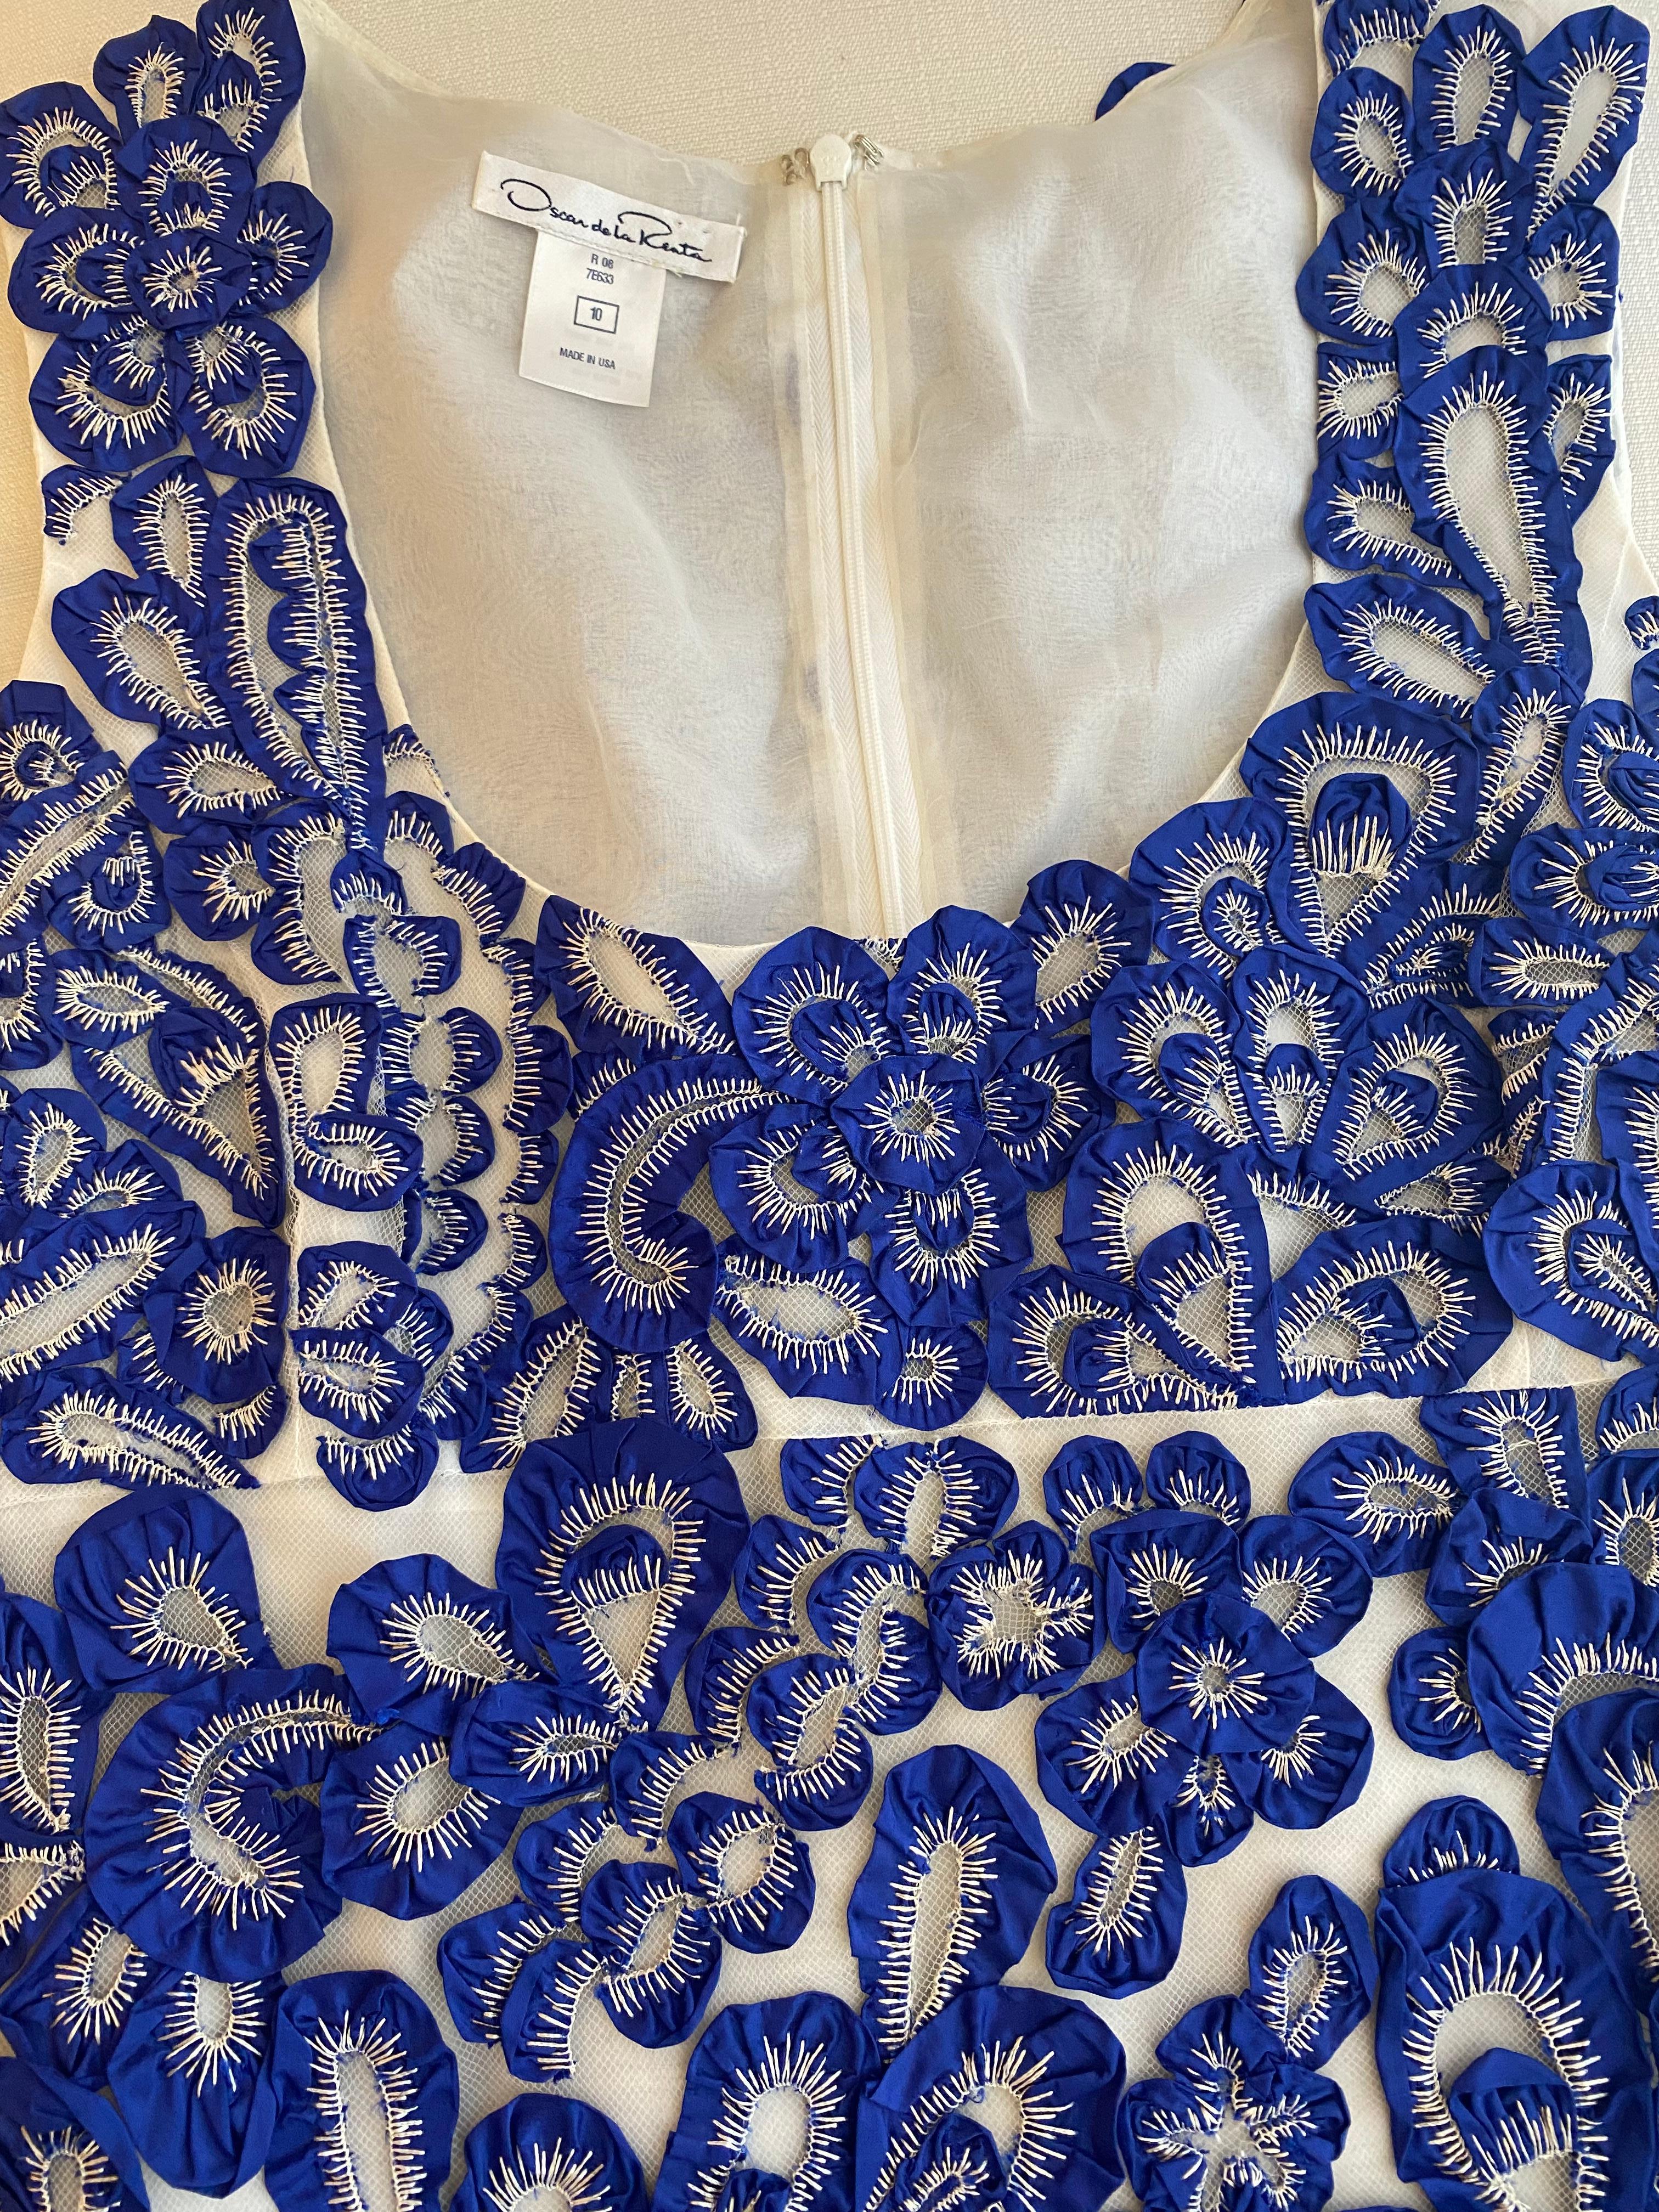 Beautiful Oscar dela renta blue silk soutache ribbon flower appliqué sleeves cocktail dress.
Marked size 10
Measurement: Bust: 36” / Waist: 38”/ Hip: 40”/ Dress length: 39”
Dress is in excellent condition.